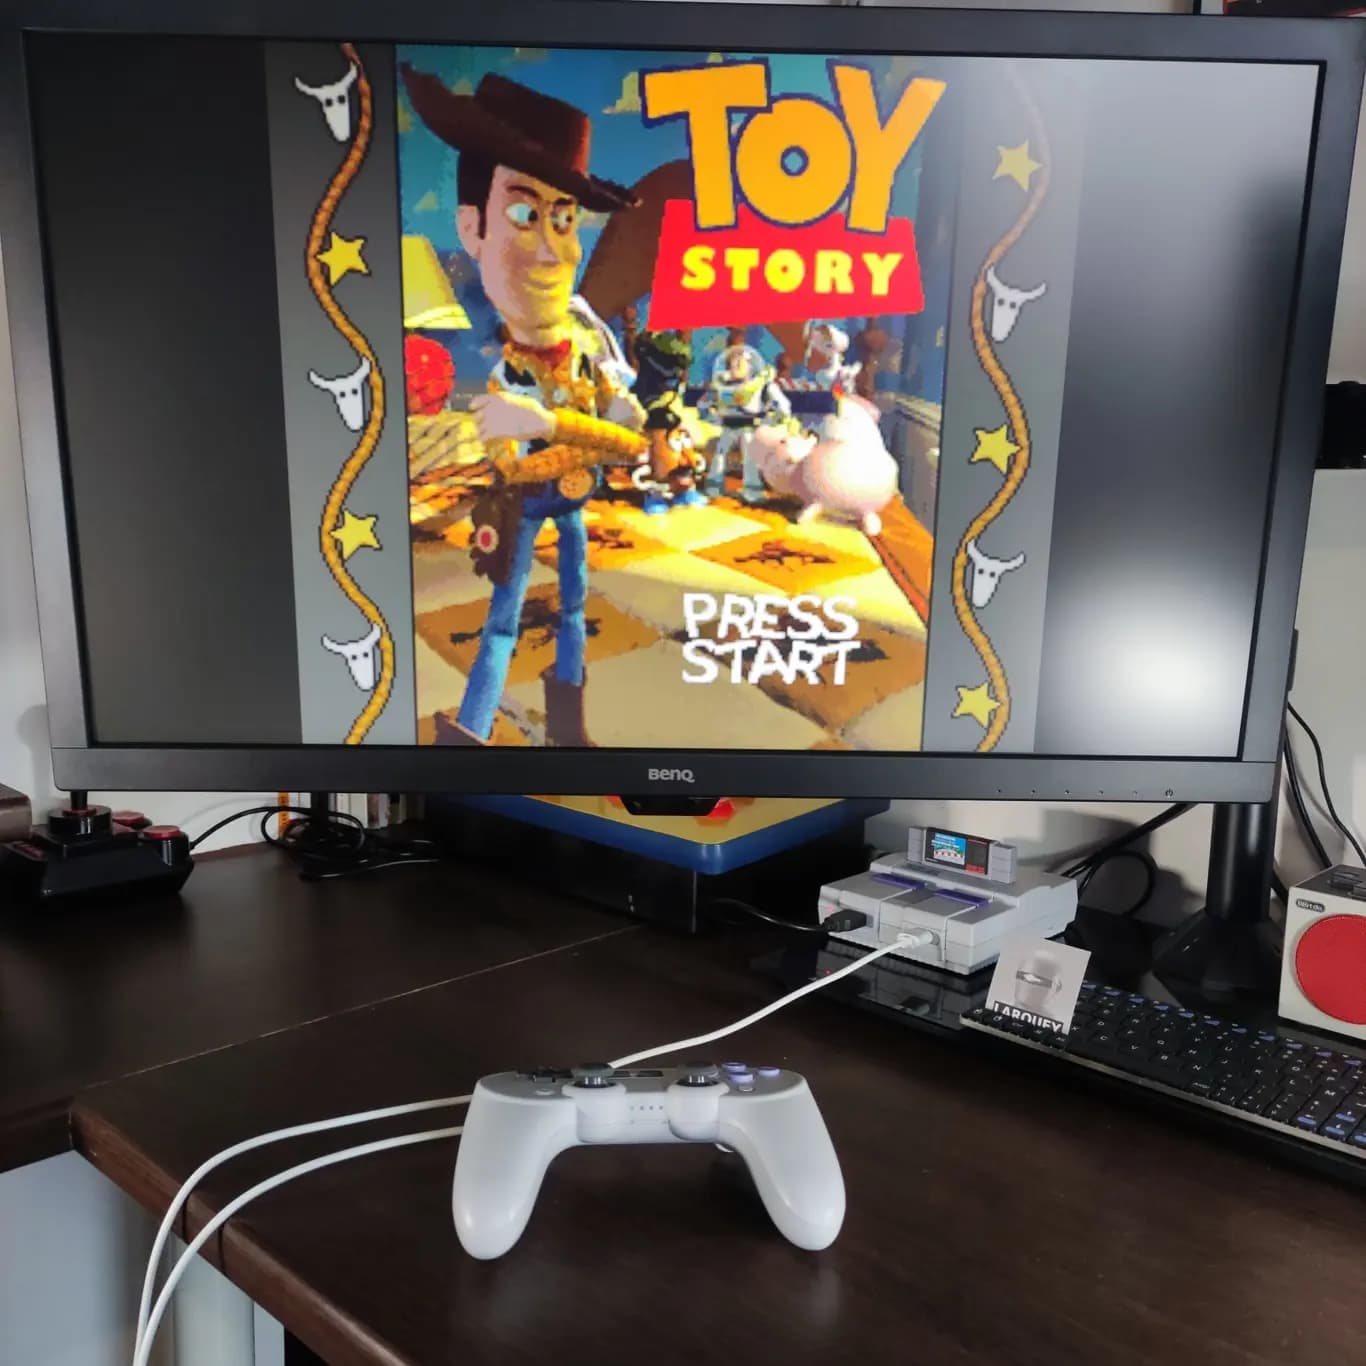 Larquey: Toy Story [Total Stars/Sheriff] (Sega Genesis / MegaDrive Emulated) 62 points on 2022-09-15 06:53:59